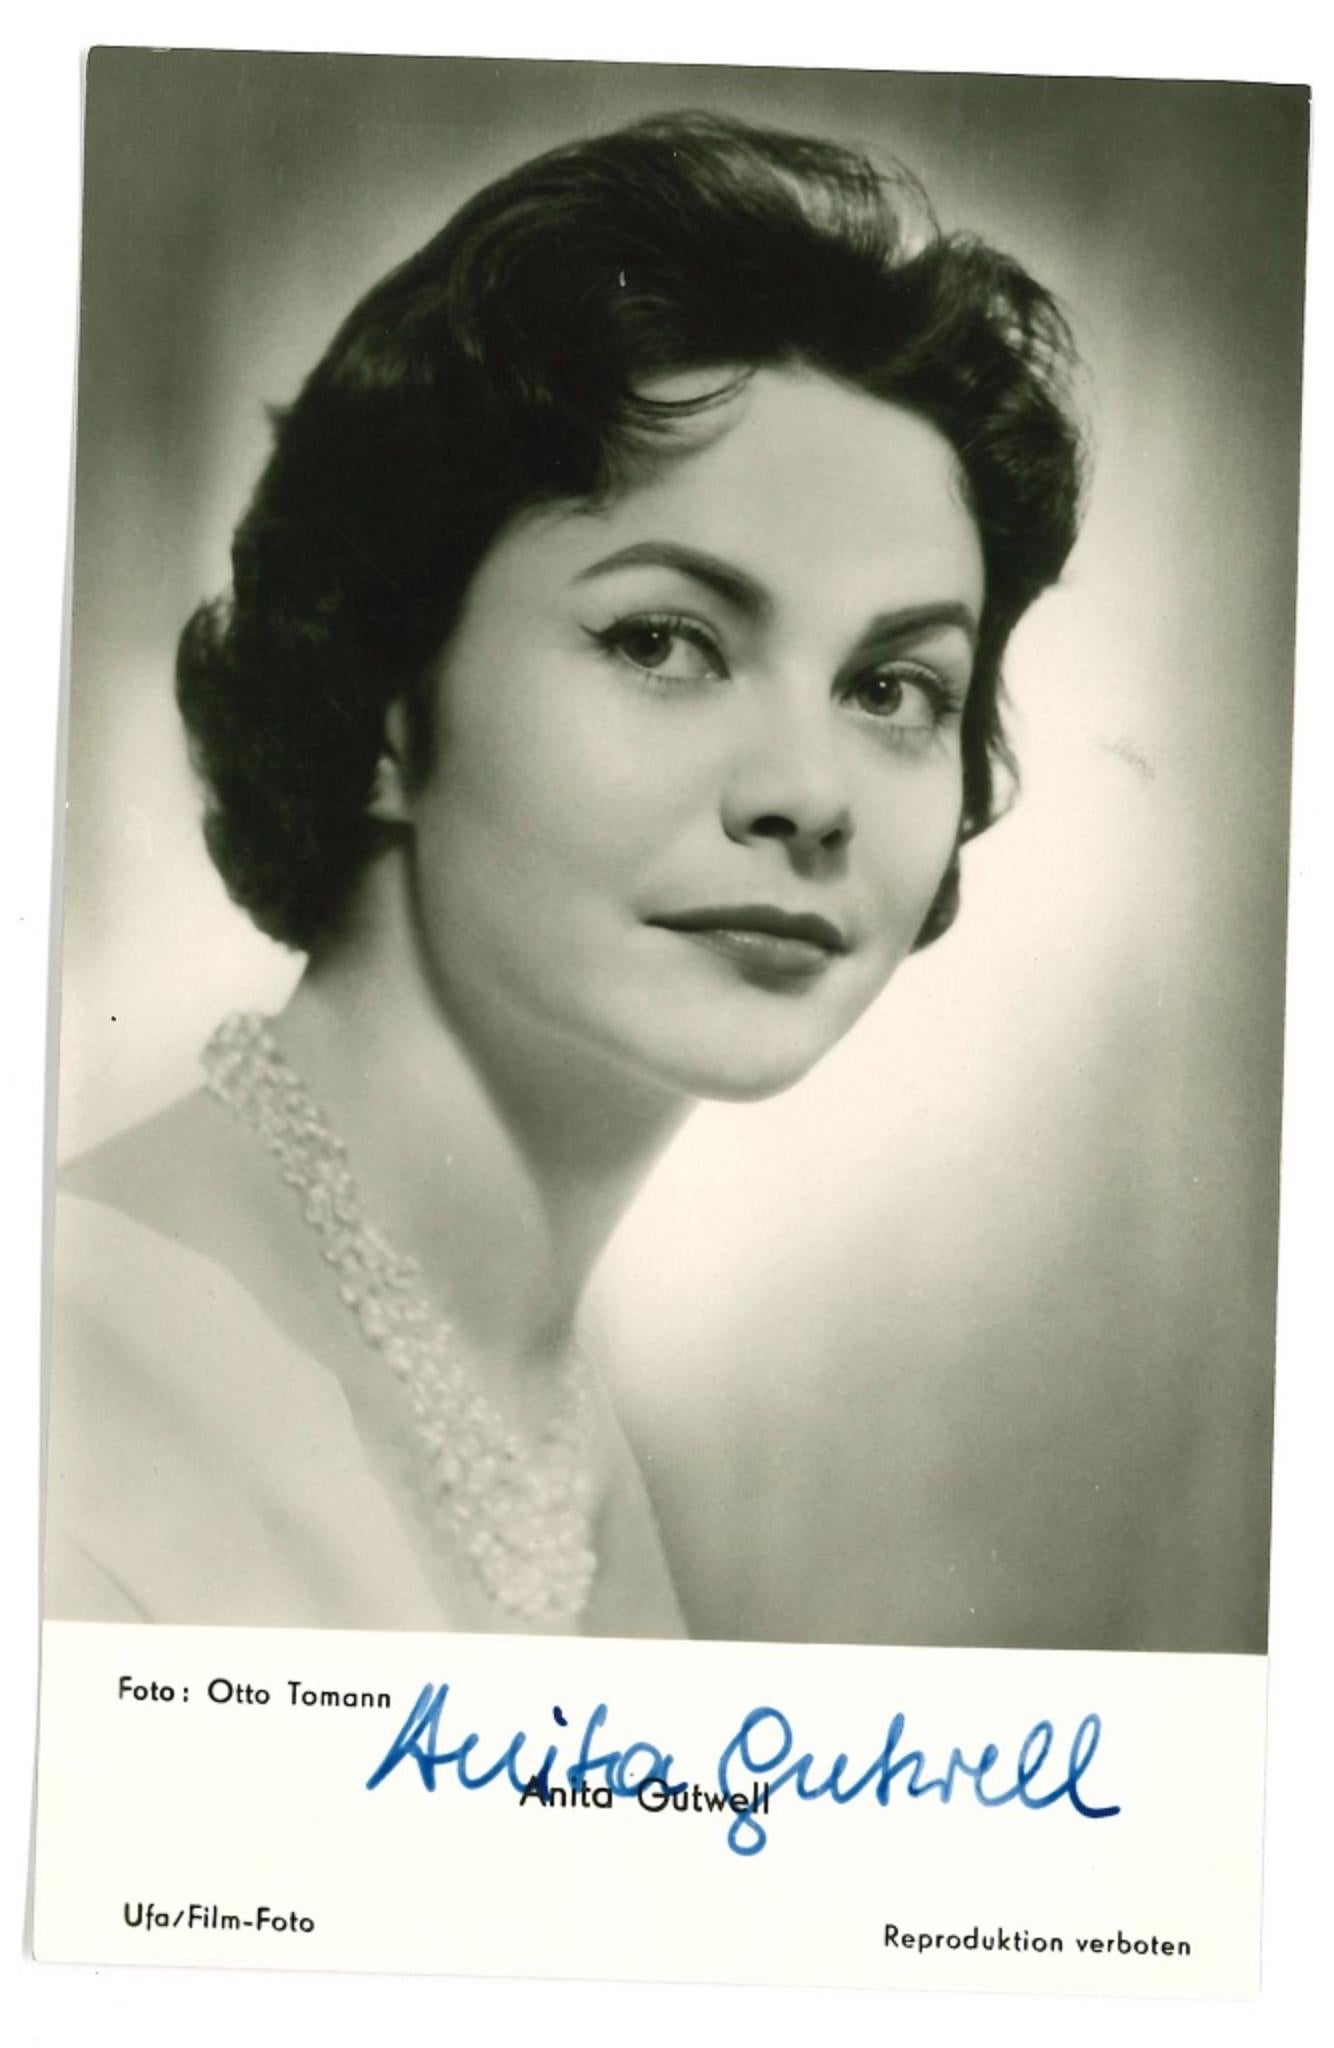 Unknown Portrait Photograph - Autograph Portrait of Anita Gütwell - Original b/w Postcard - 1950s